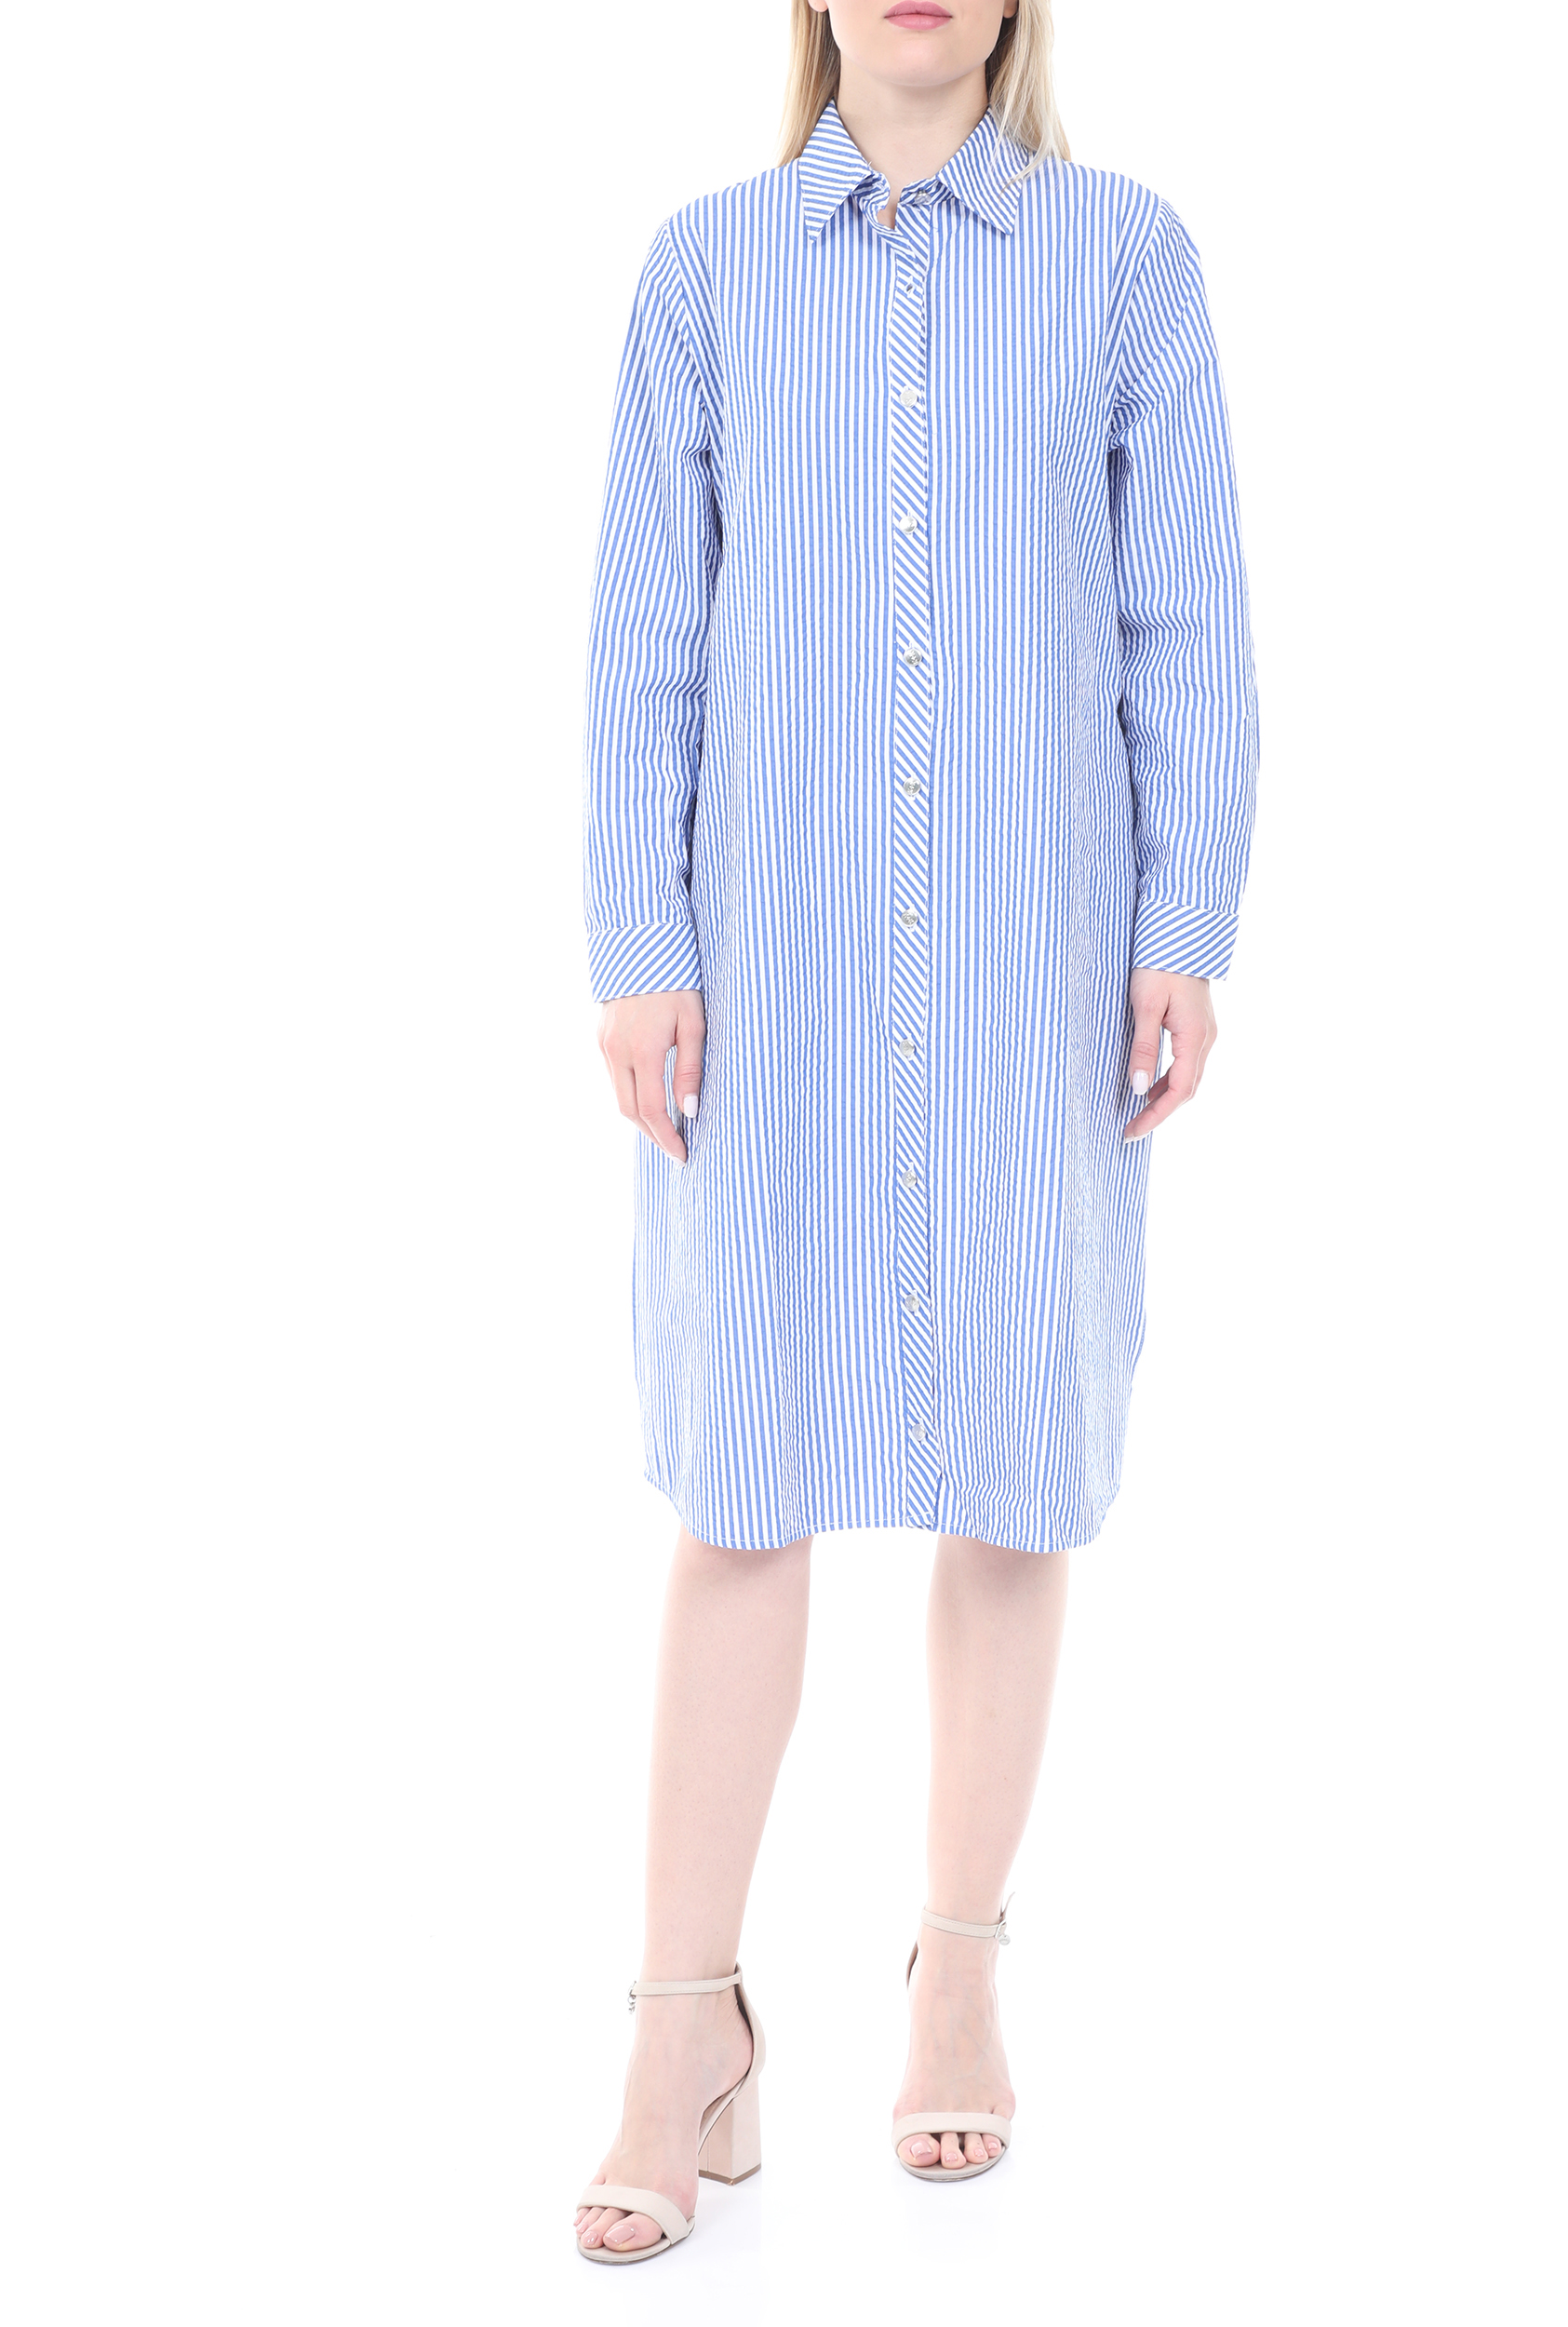 KENDALL + KYLIE – Γυναικειο mini φορεμα KENDALL + KYLIE NAVY STRIPE LOOSE μπλε λευκο